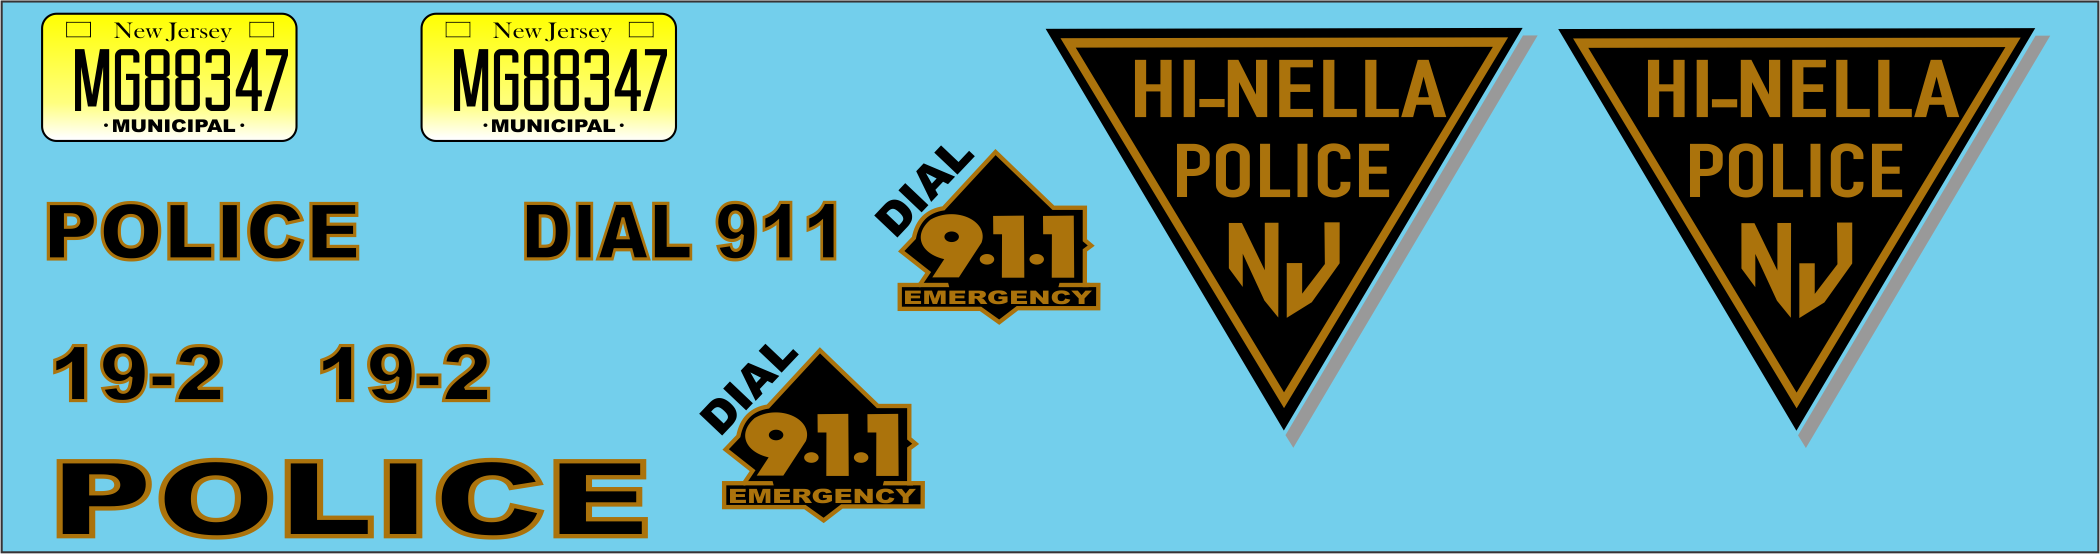 1/24-1/25 HI Nella, New Jersey Police Department